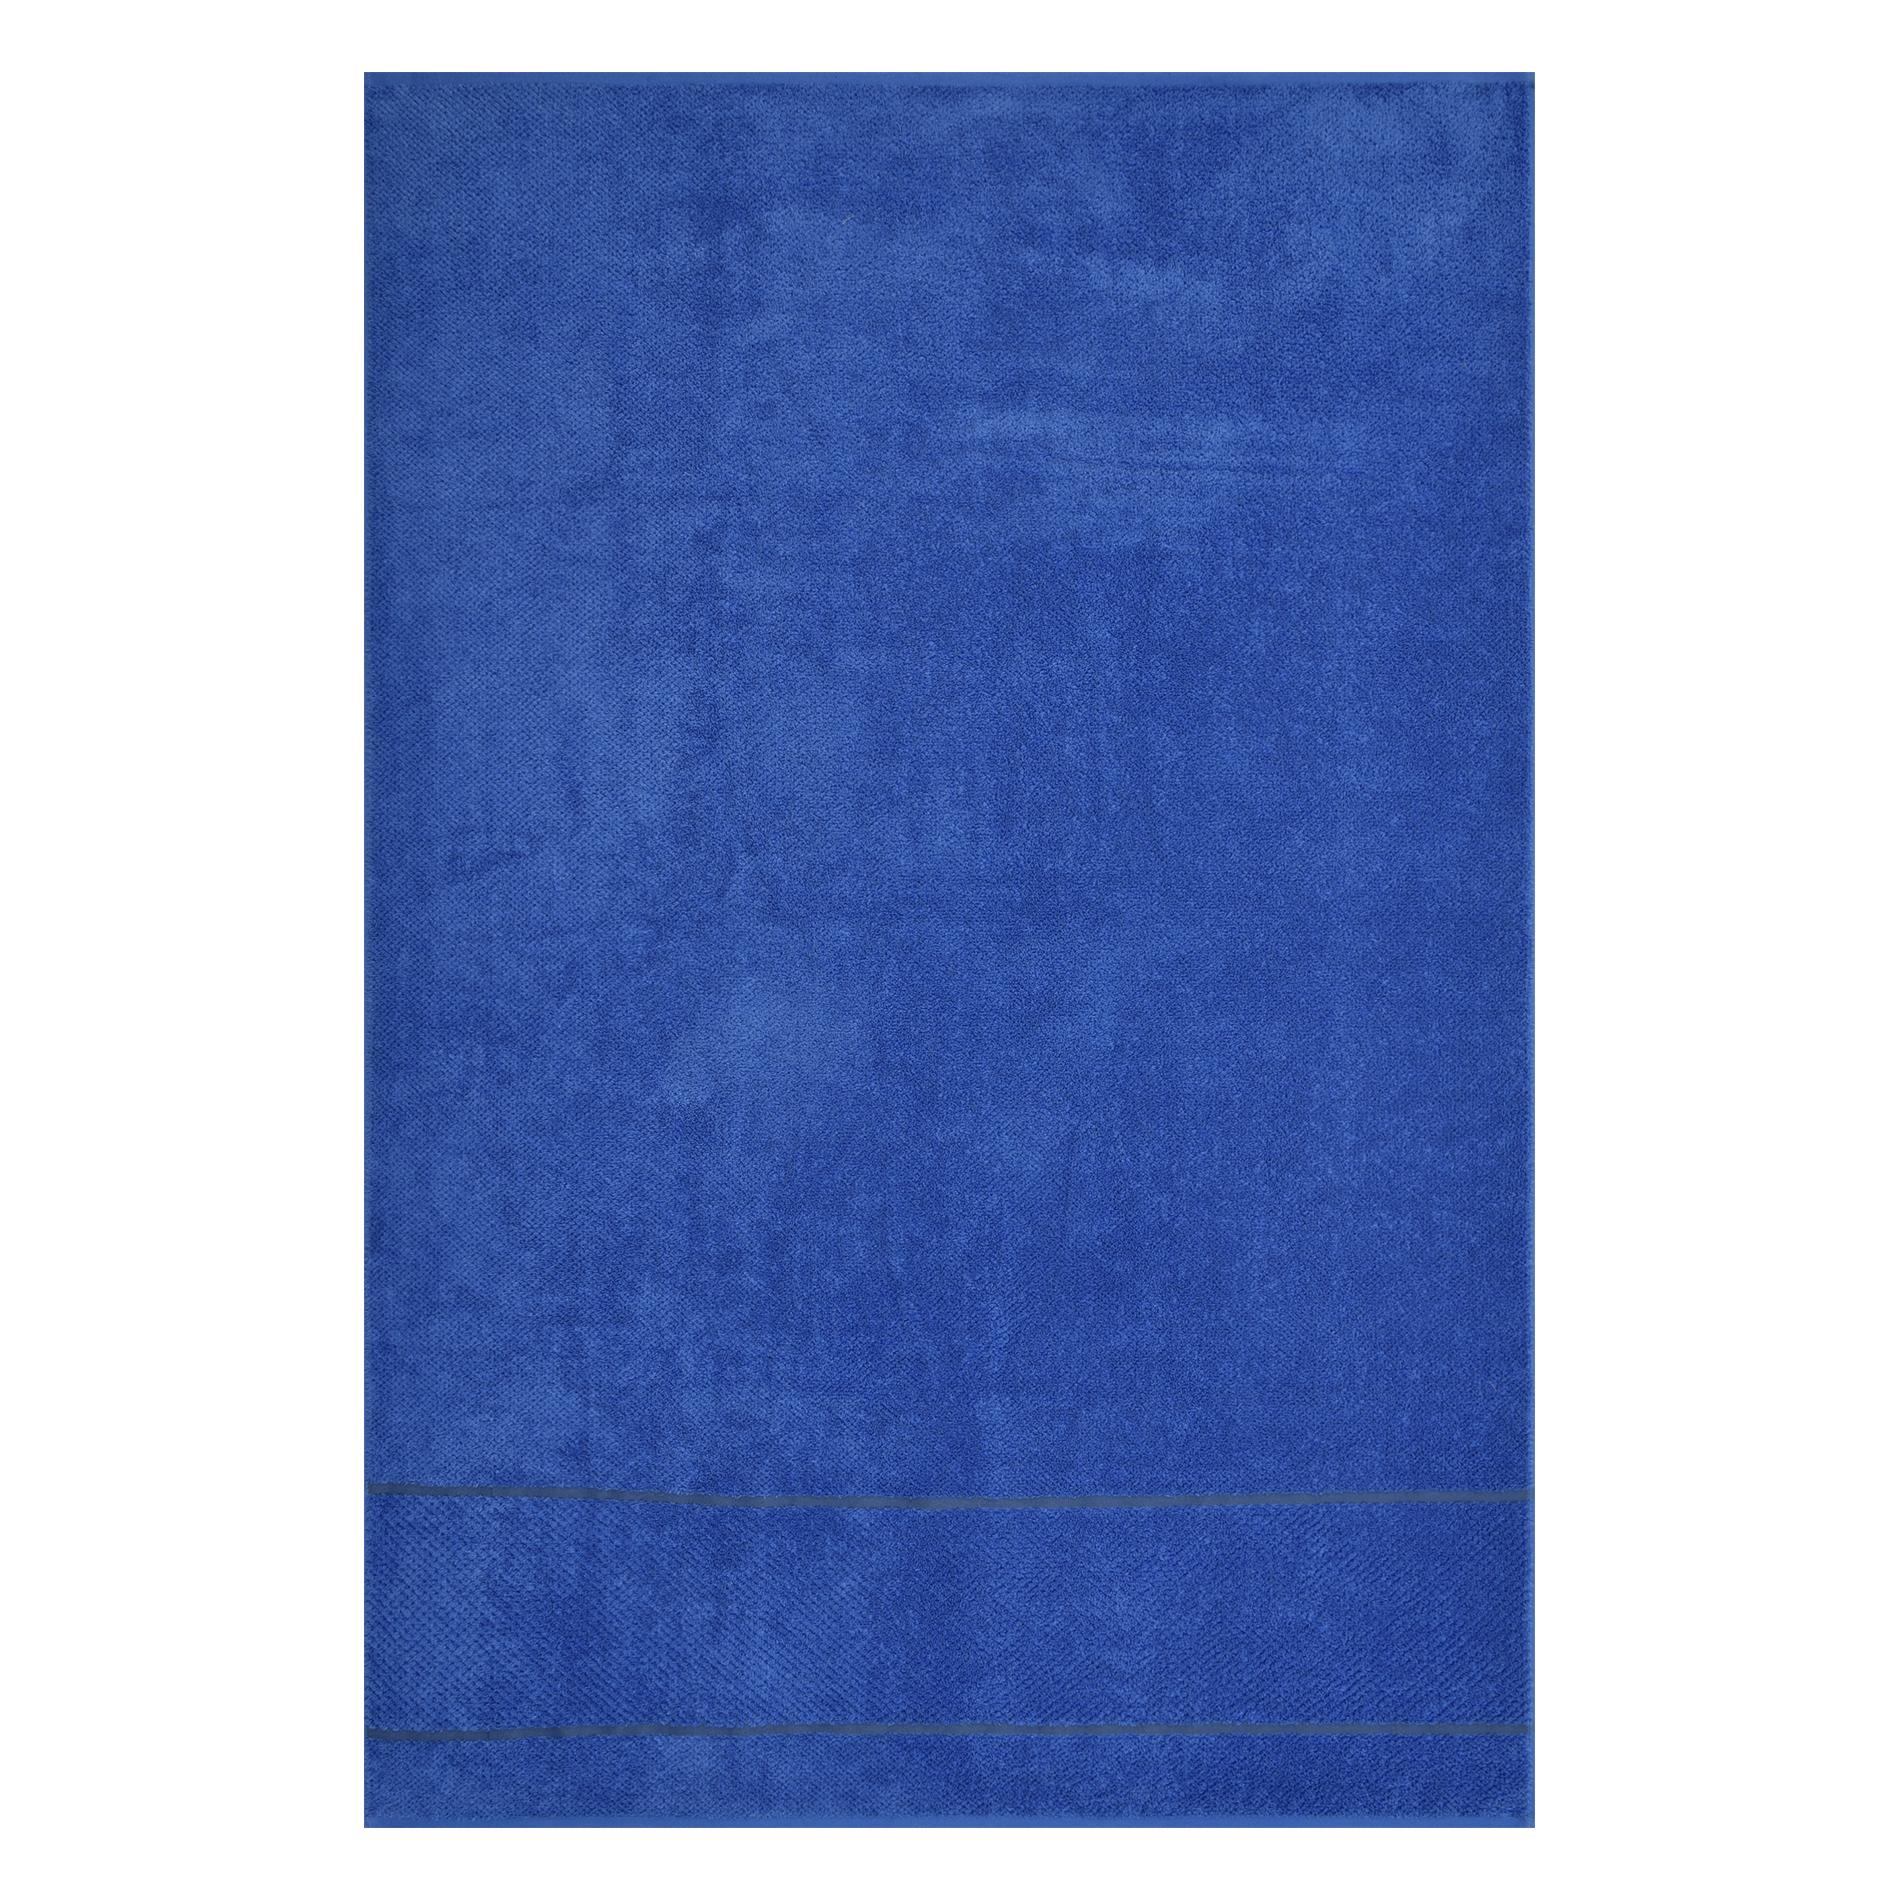 Махровое полотенце Cleanelly Fiordaliso синее 100х150 см полотенце тоскана песочный р 100х150